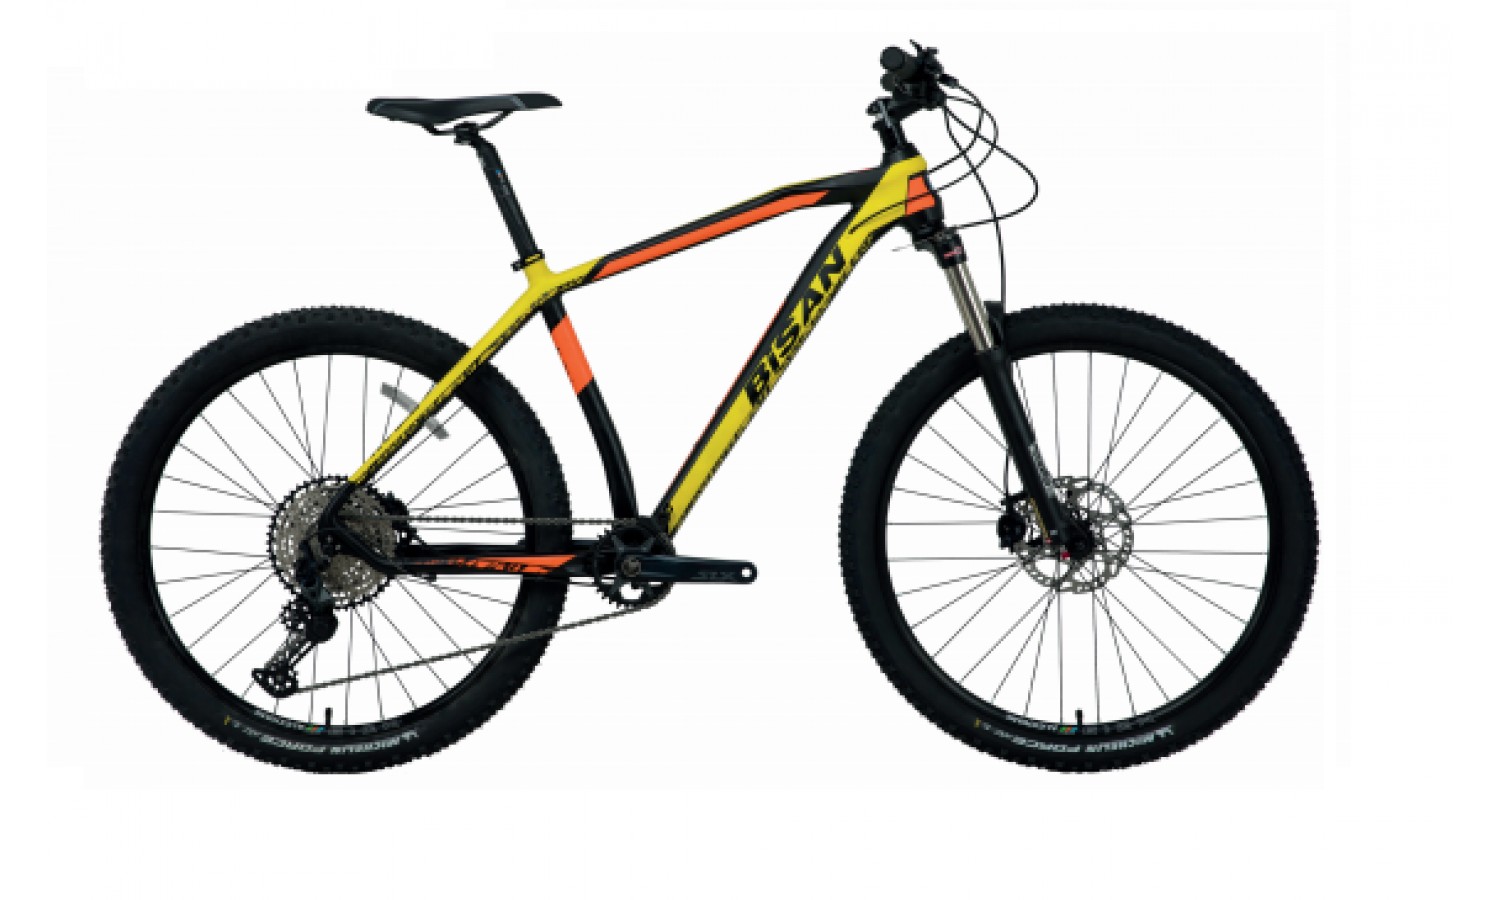 Bisan Mtx 7800 29 Jant Hd Dağ Bisikleti Deore (Mat Siyah Sarı)